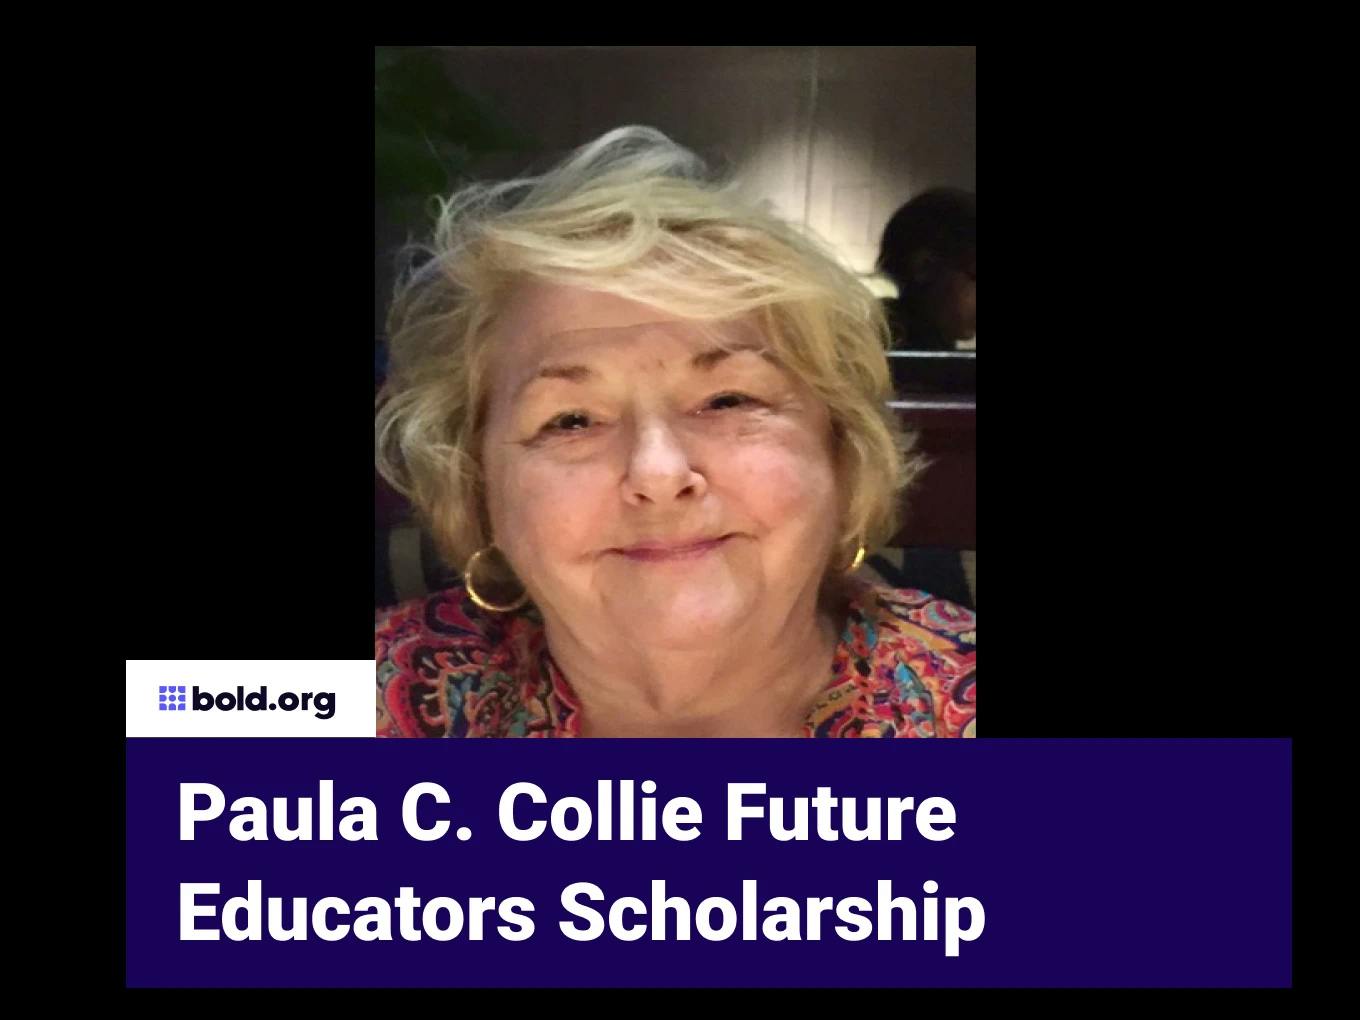 Paula C. Collie Future Educators Scholarship